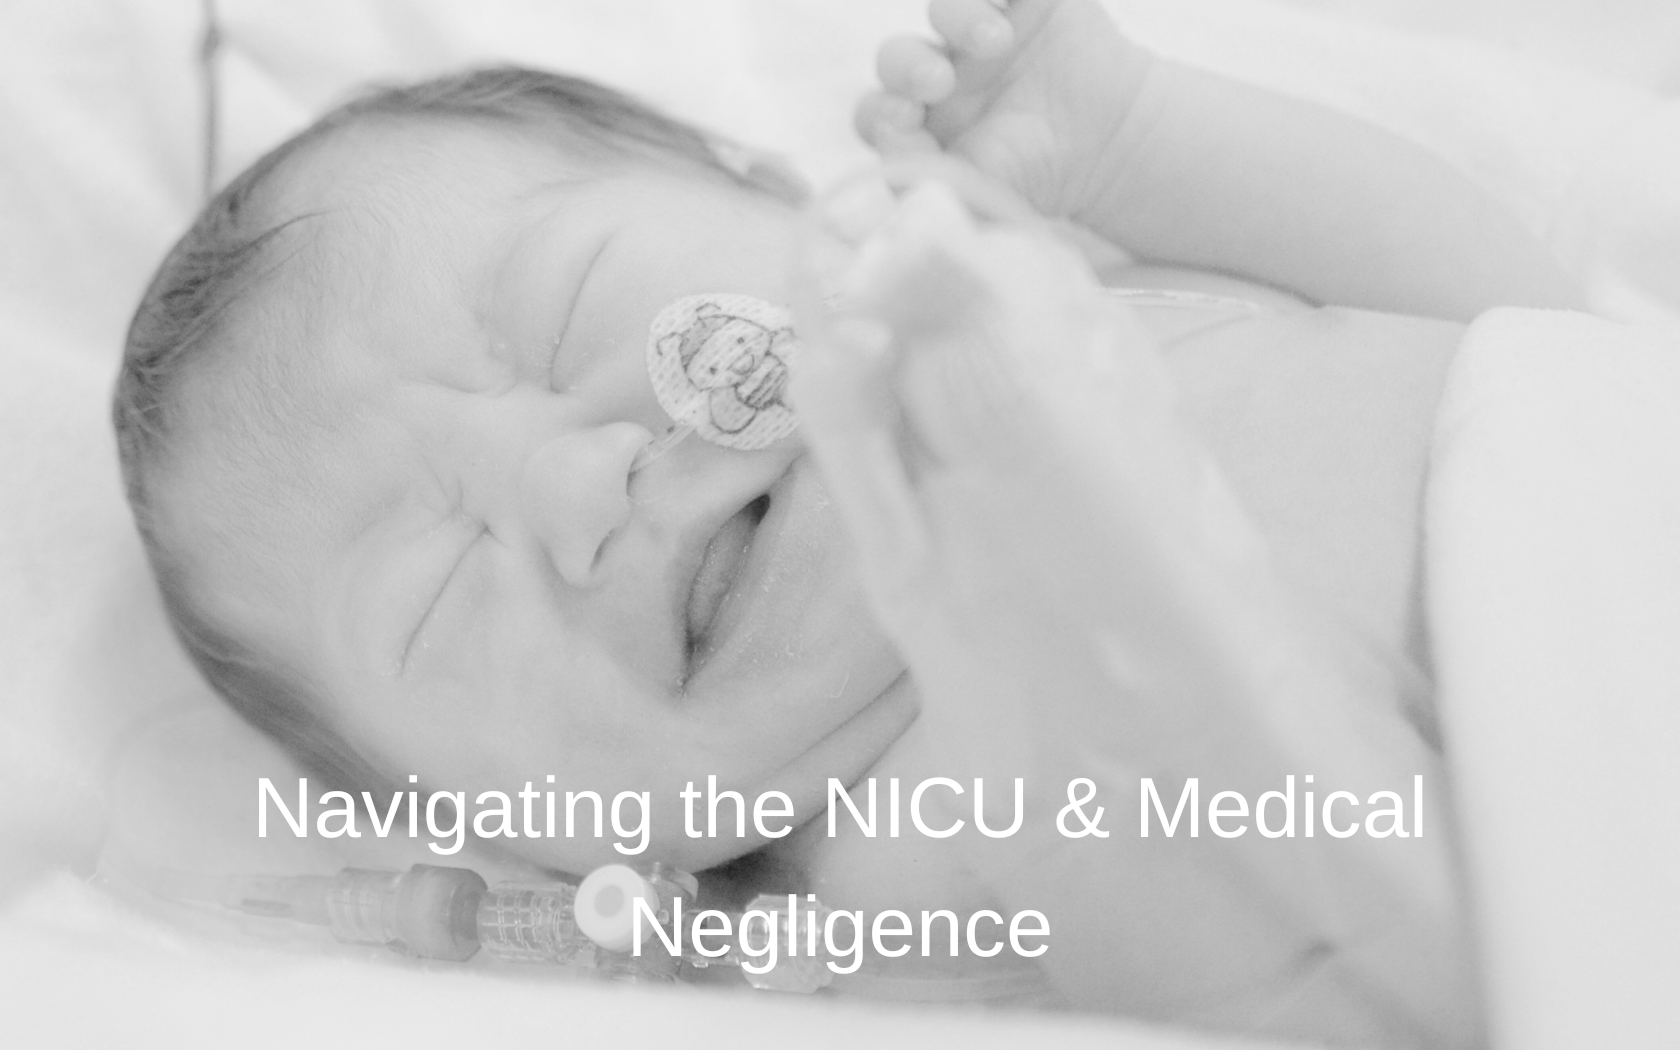 Baby crying in a NICU incubator.